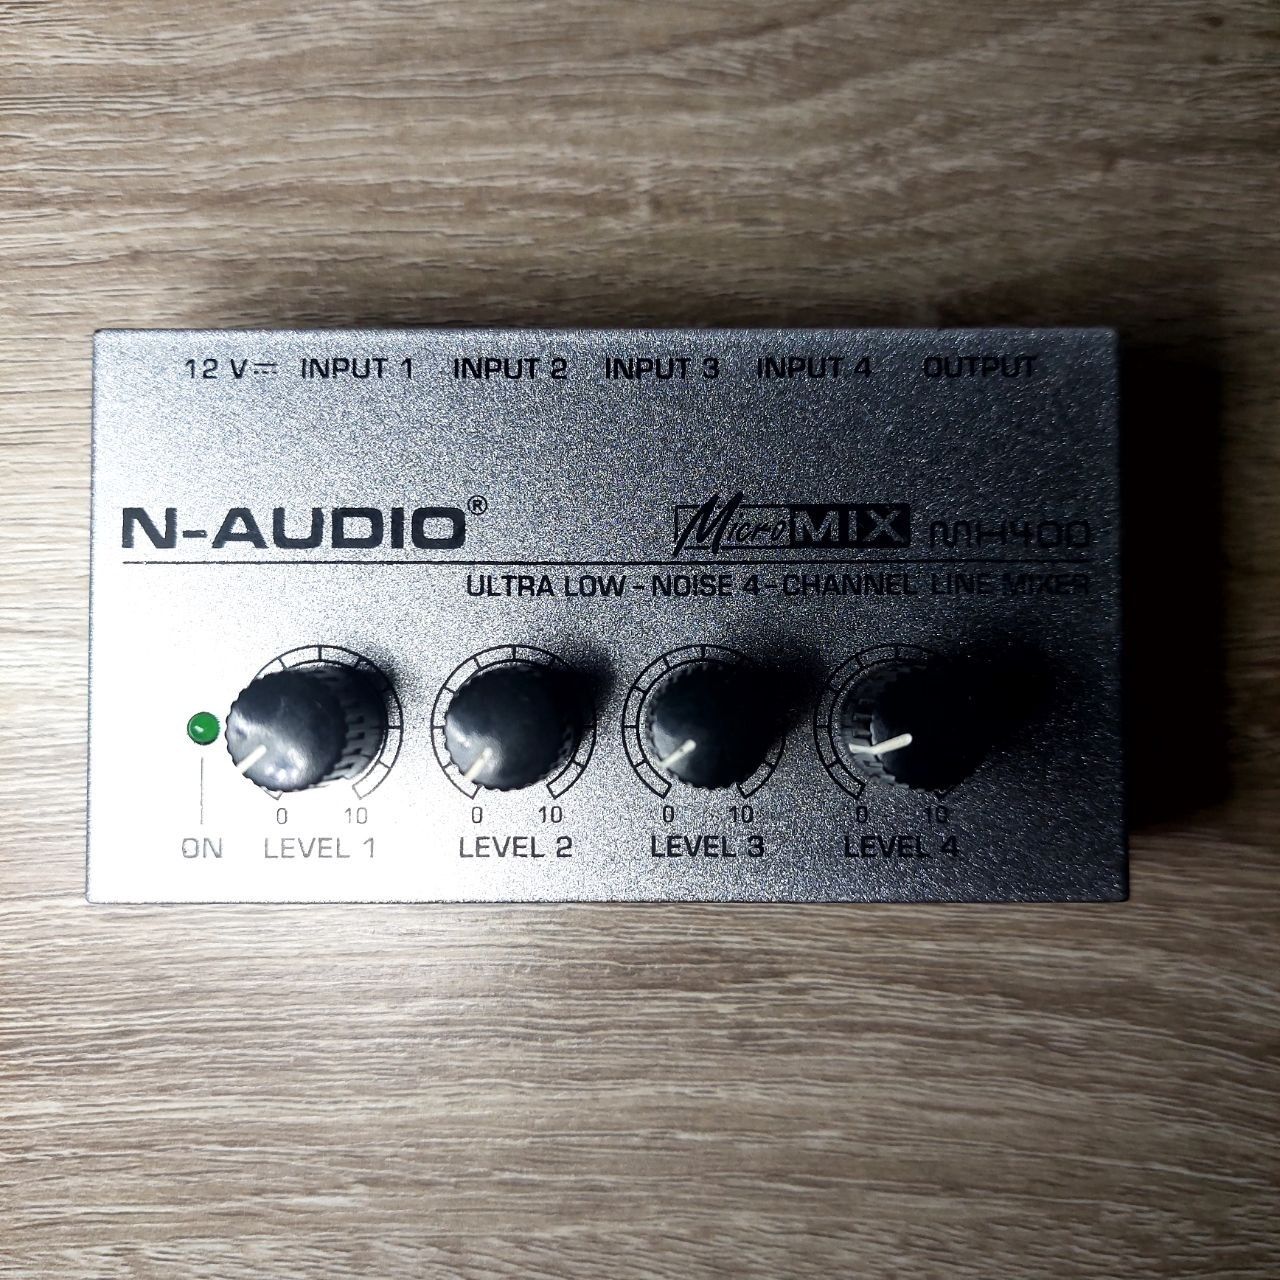 N-audio (mini mixcer)